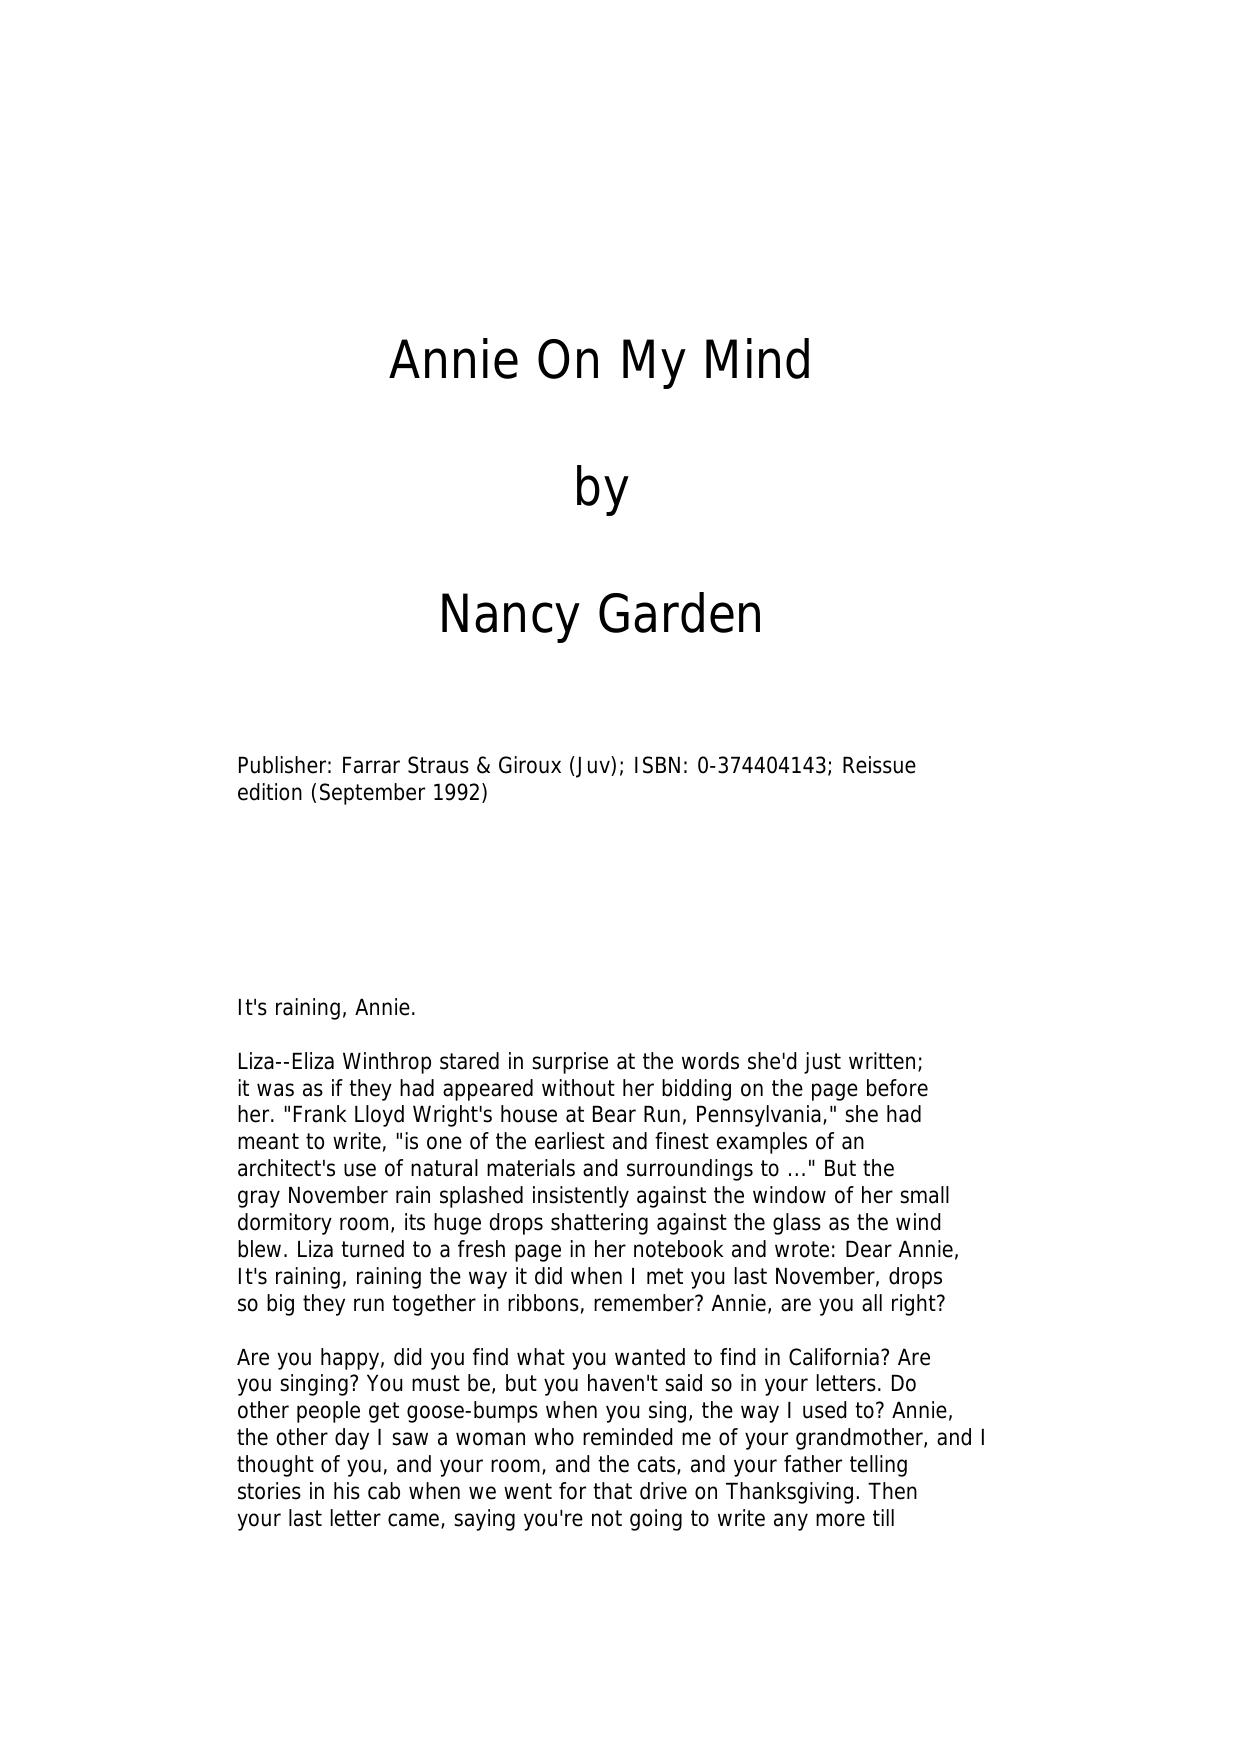 nancy garden books